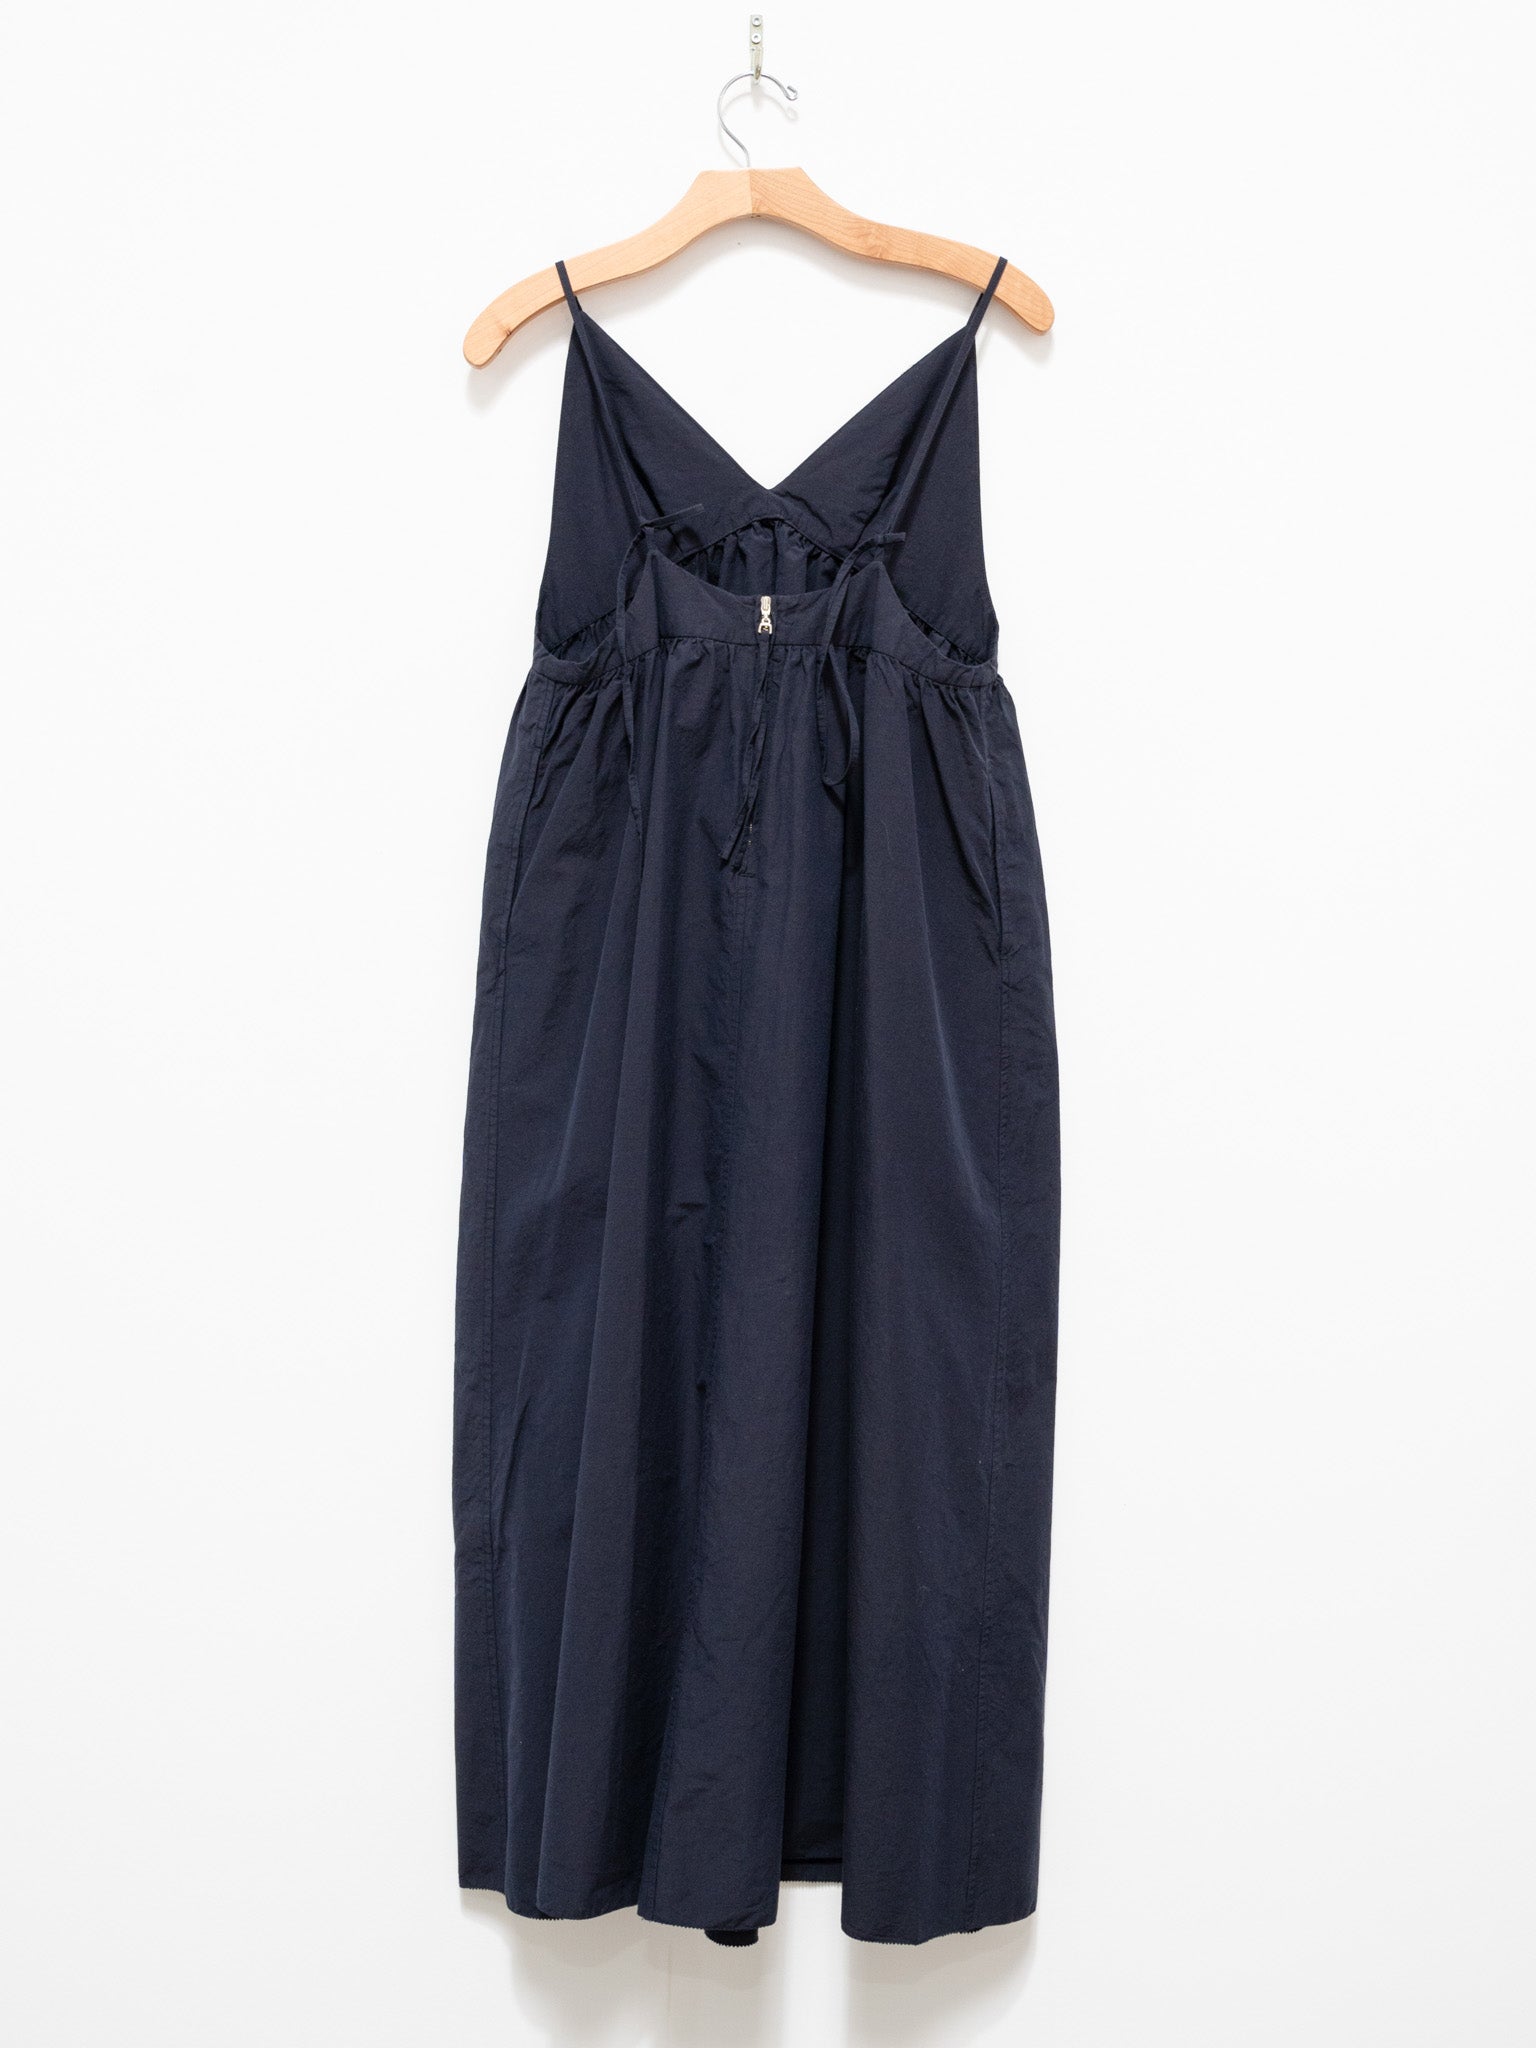 Namu Shop - Unfil Chambray Weather Cloth Camisole Dress - Navy